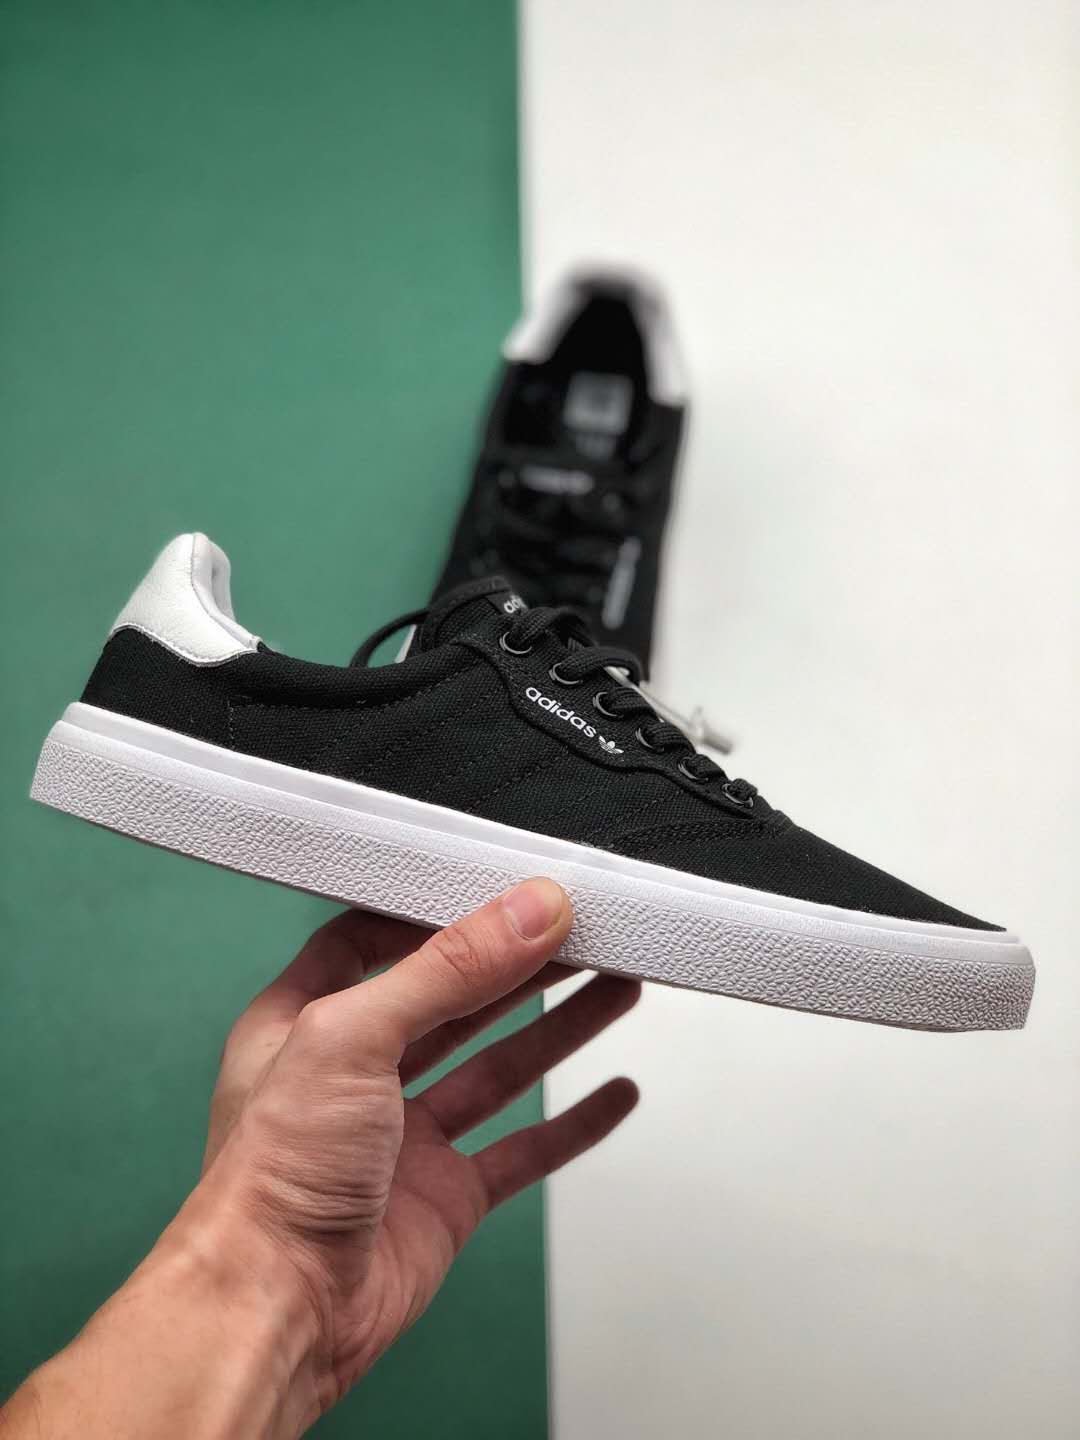 Adidas 3MC Vulc Core Black B22706 - Stylish Skate Shoes for All-Day Comfort